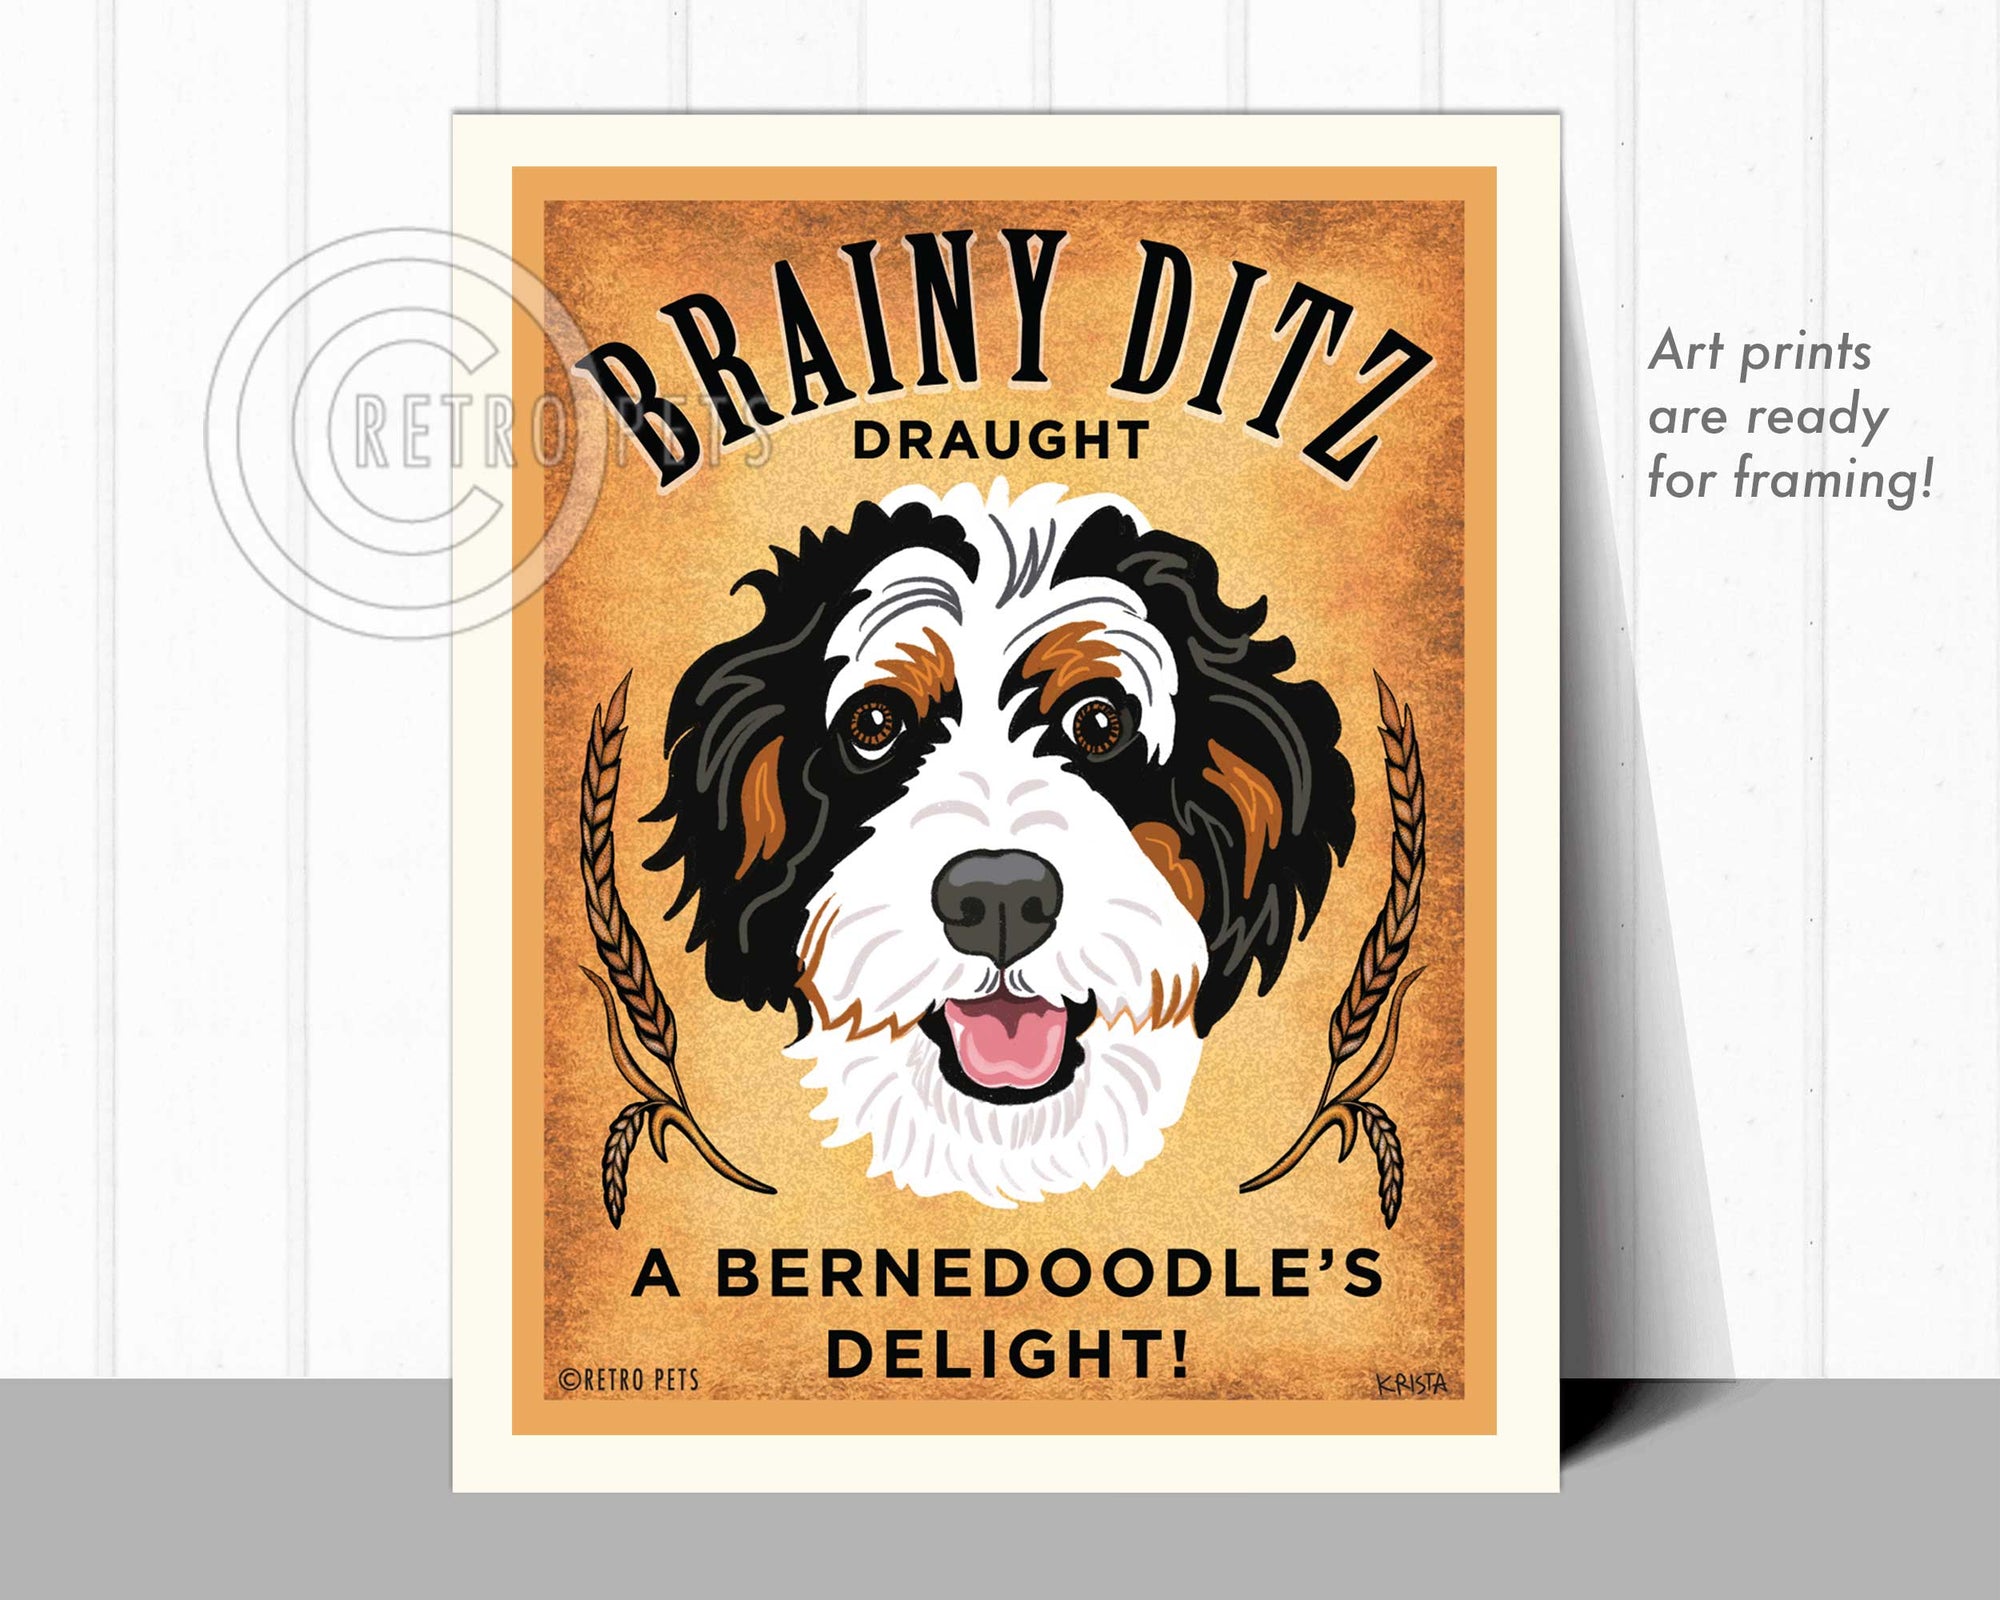 Bernedoodle Art "Brainy Ditz Draught" Art Print by Krista Brooks